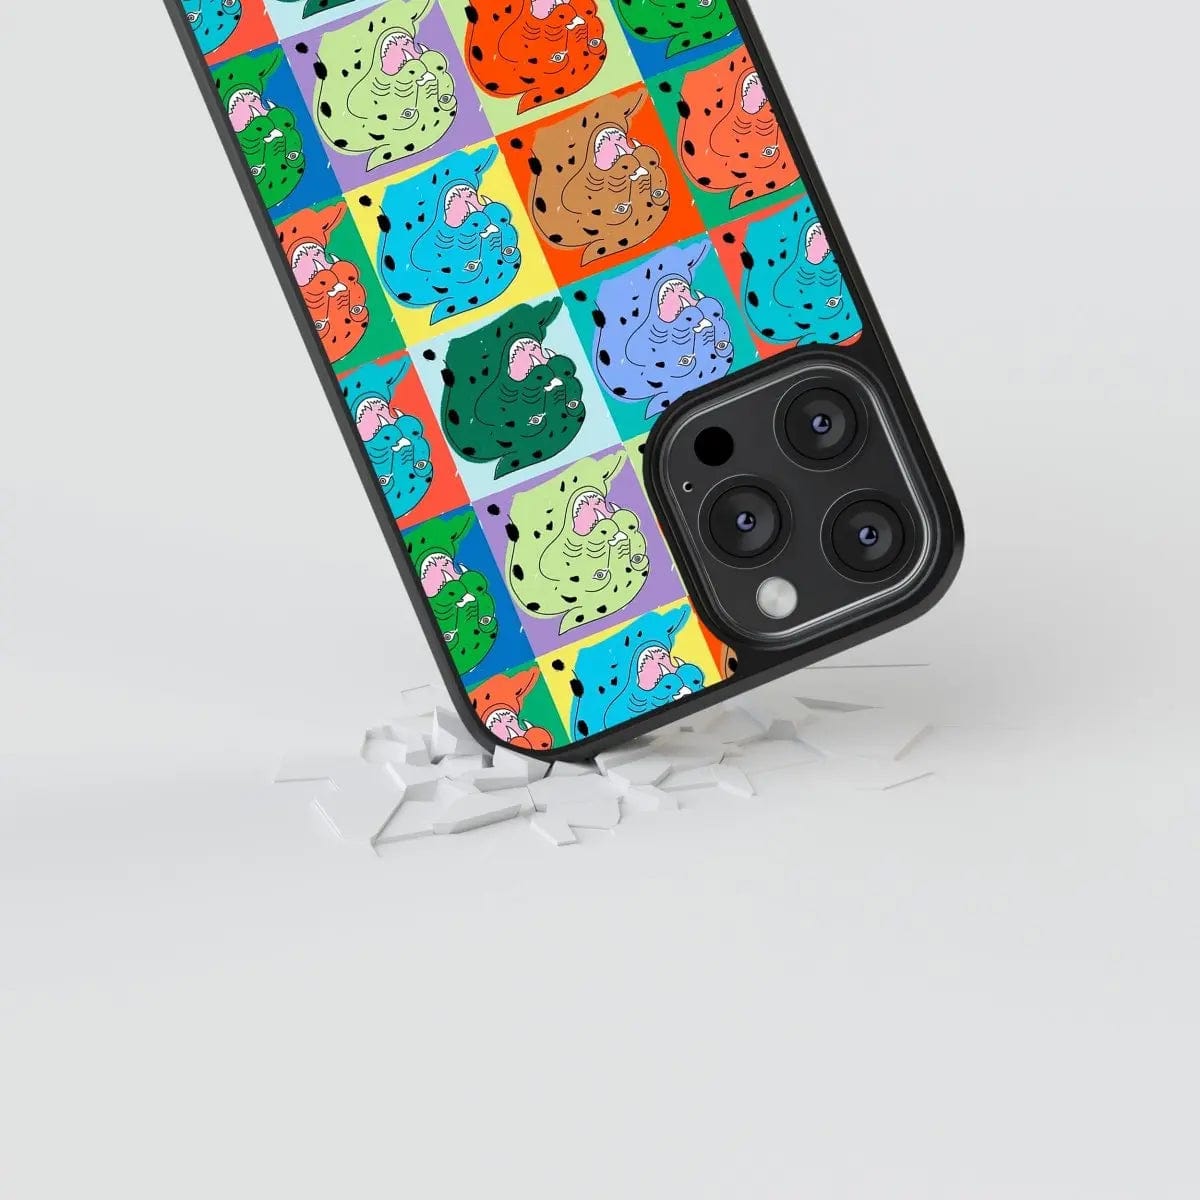 Phone case "Bright art collage" - Artcase